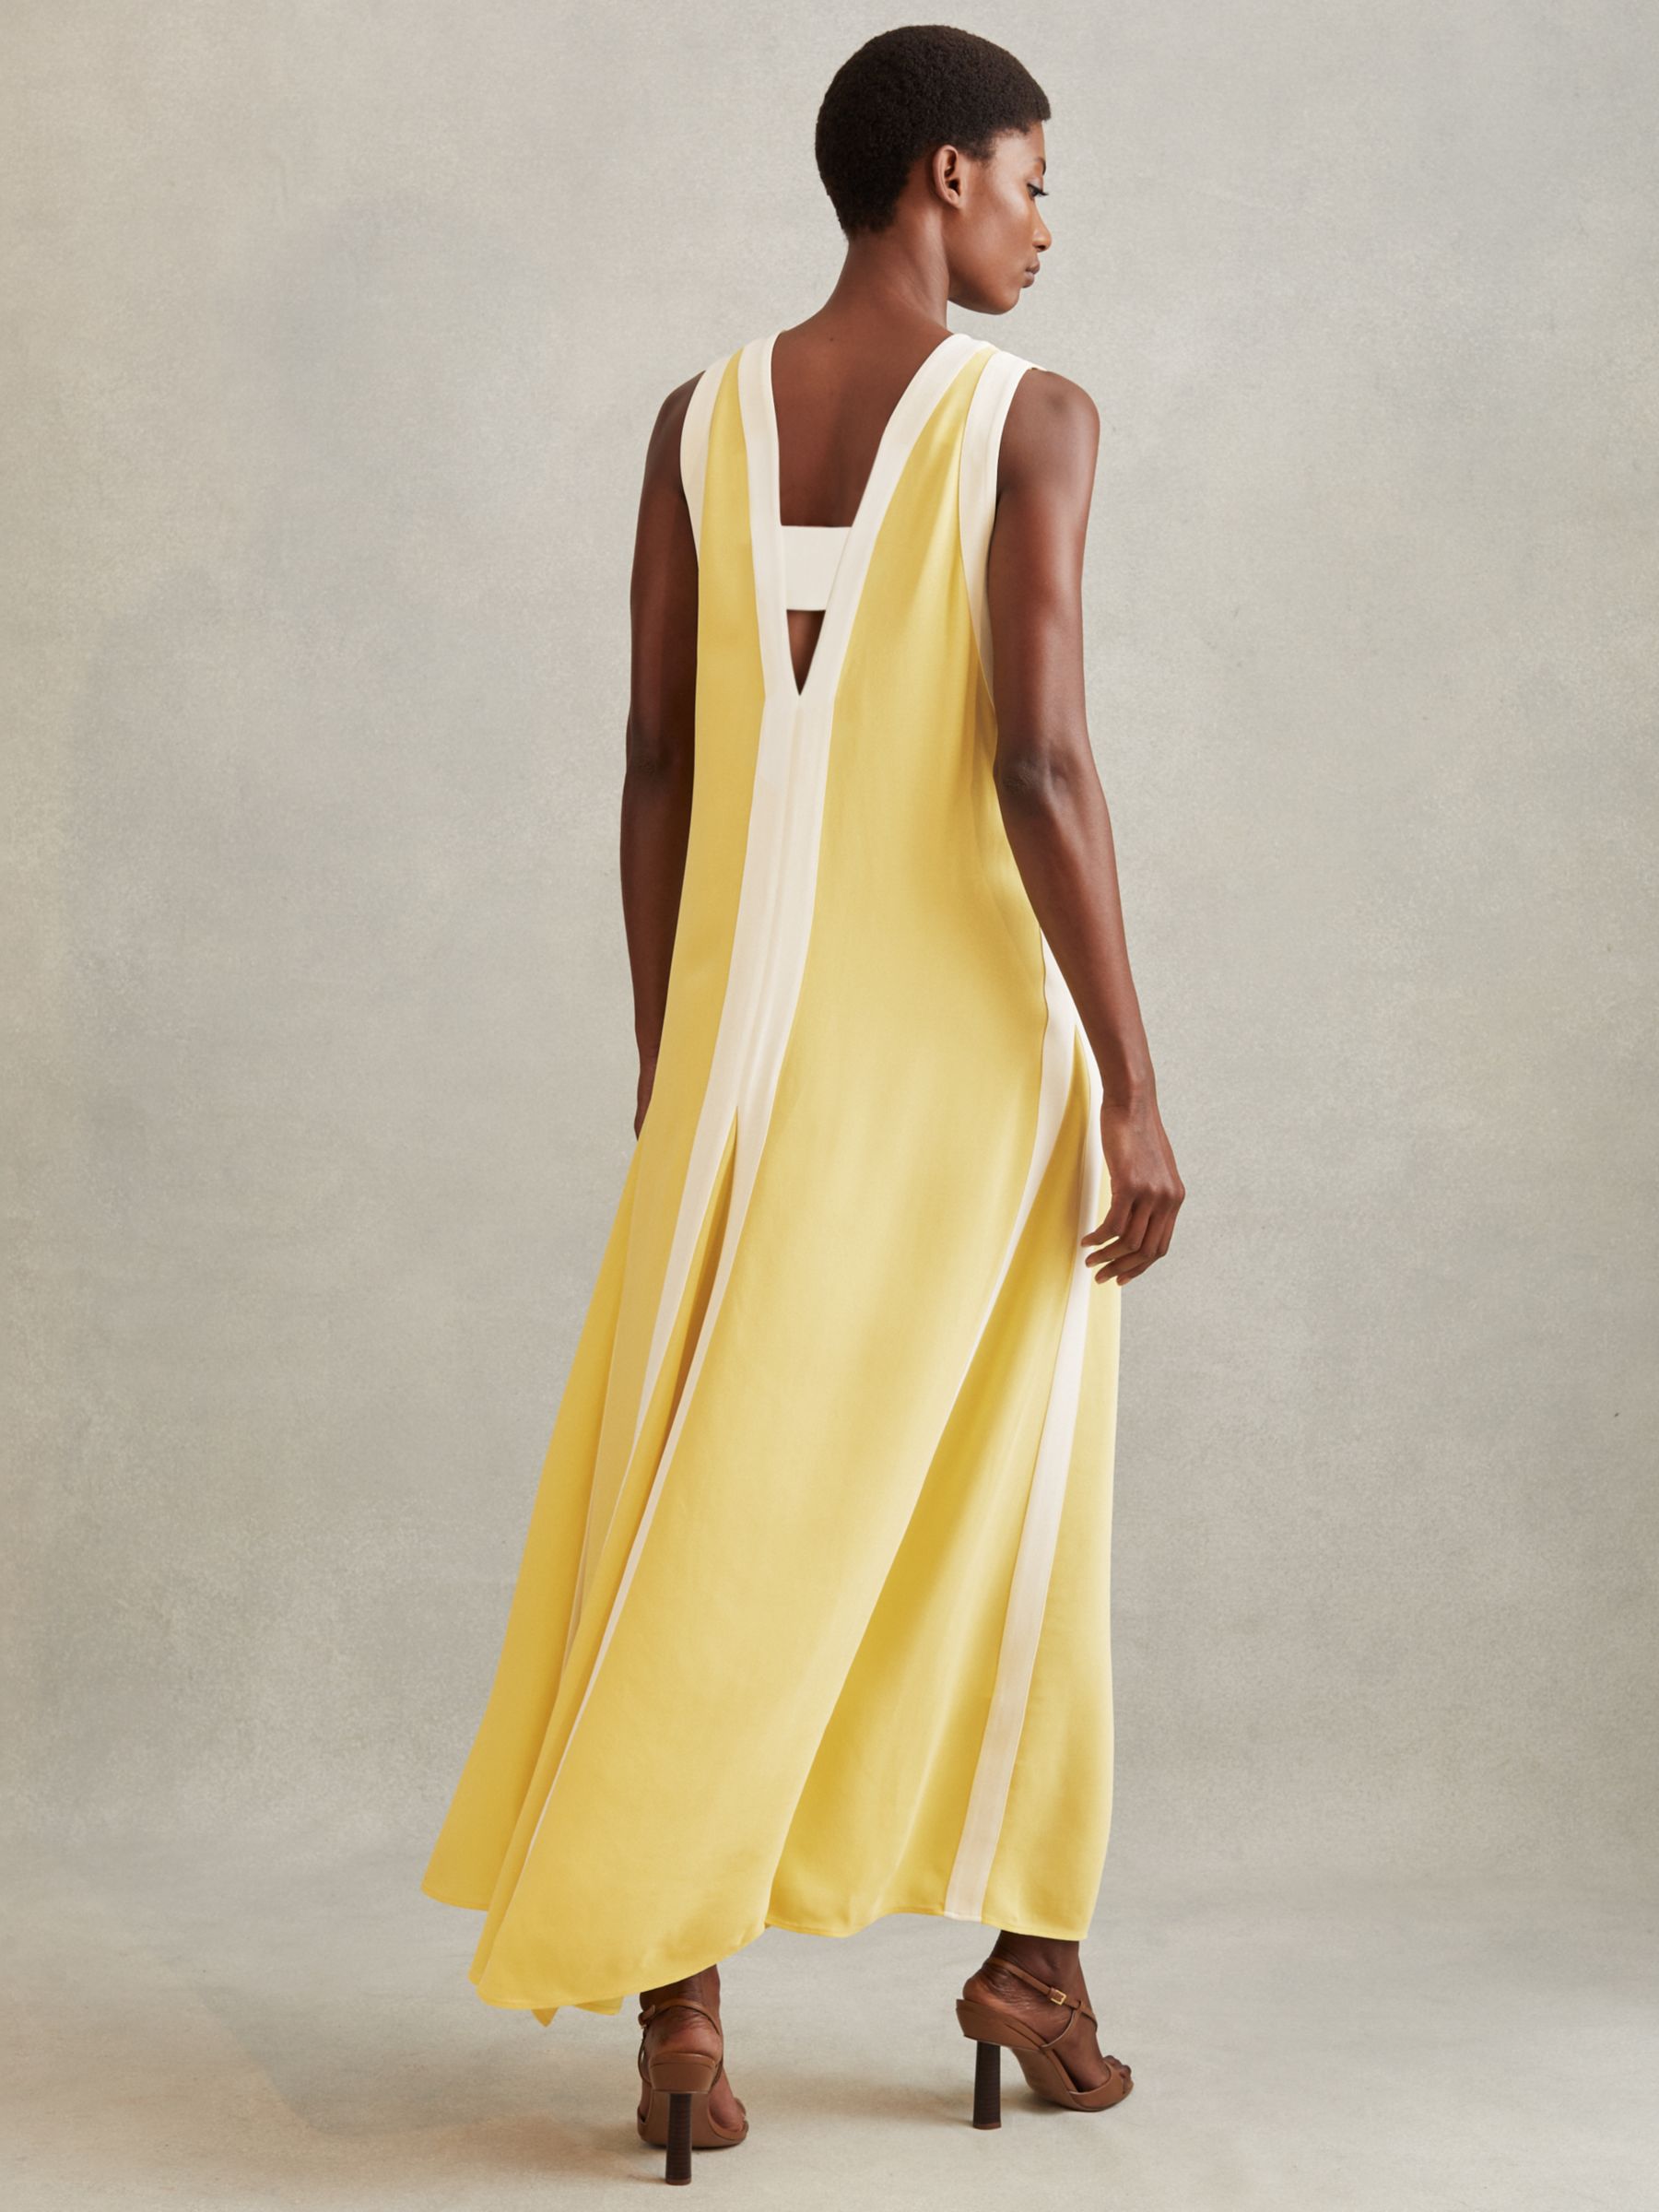 Reiss Rae Colourblock Maxi Dress, Yellow/Cream, 6